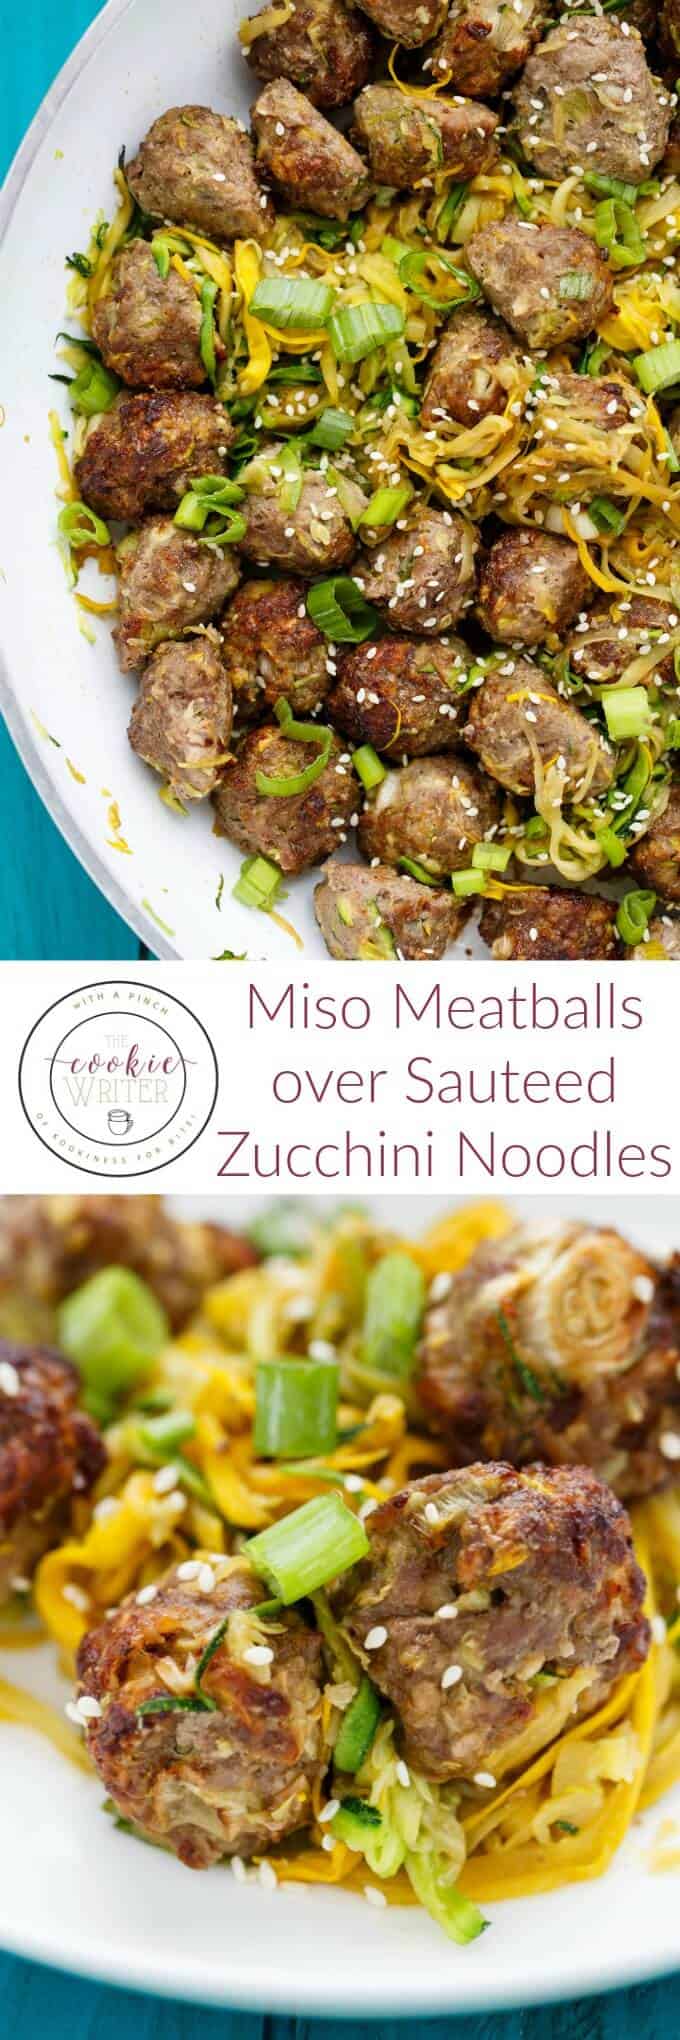 Miso Meatballs over Sauteed Zucchini Noodles